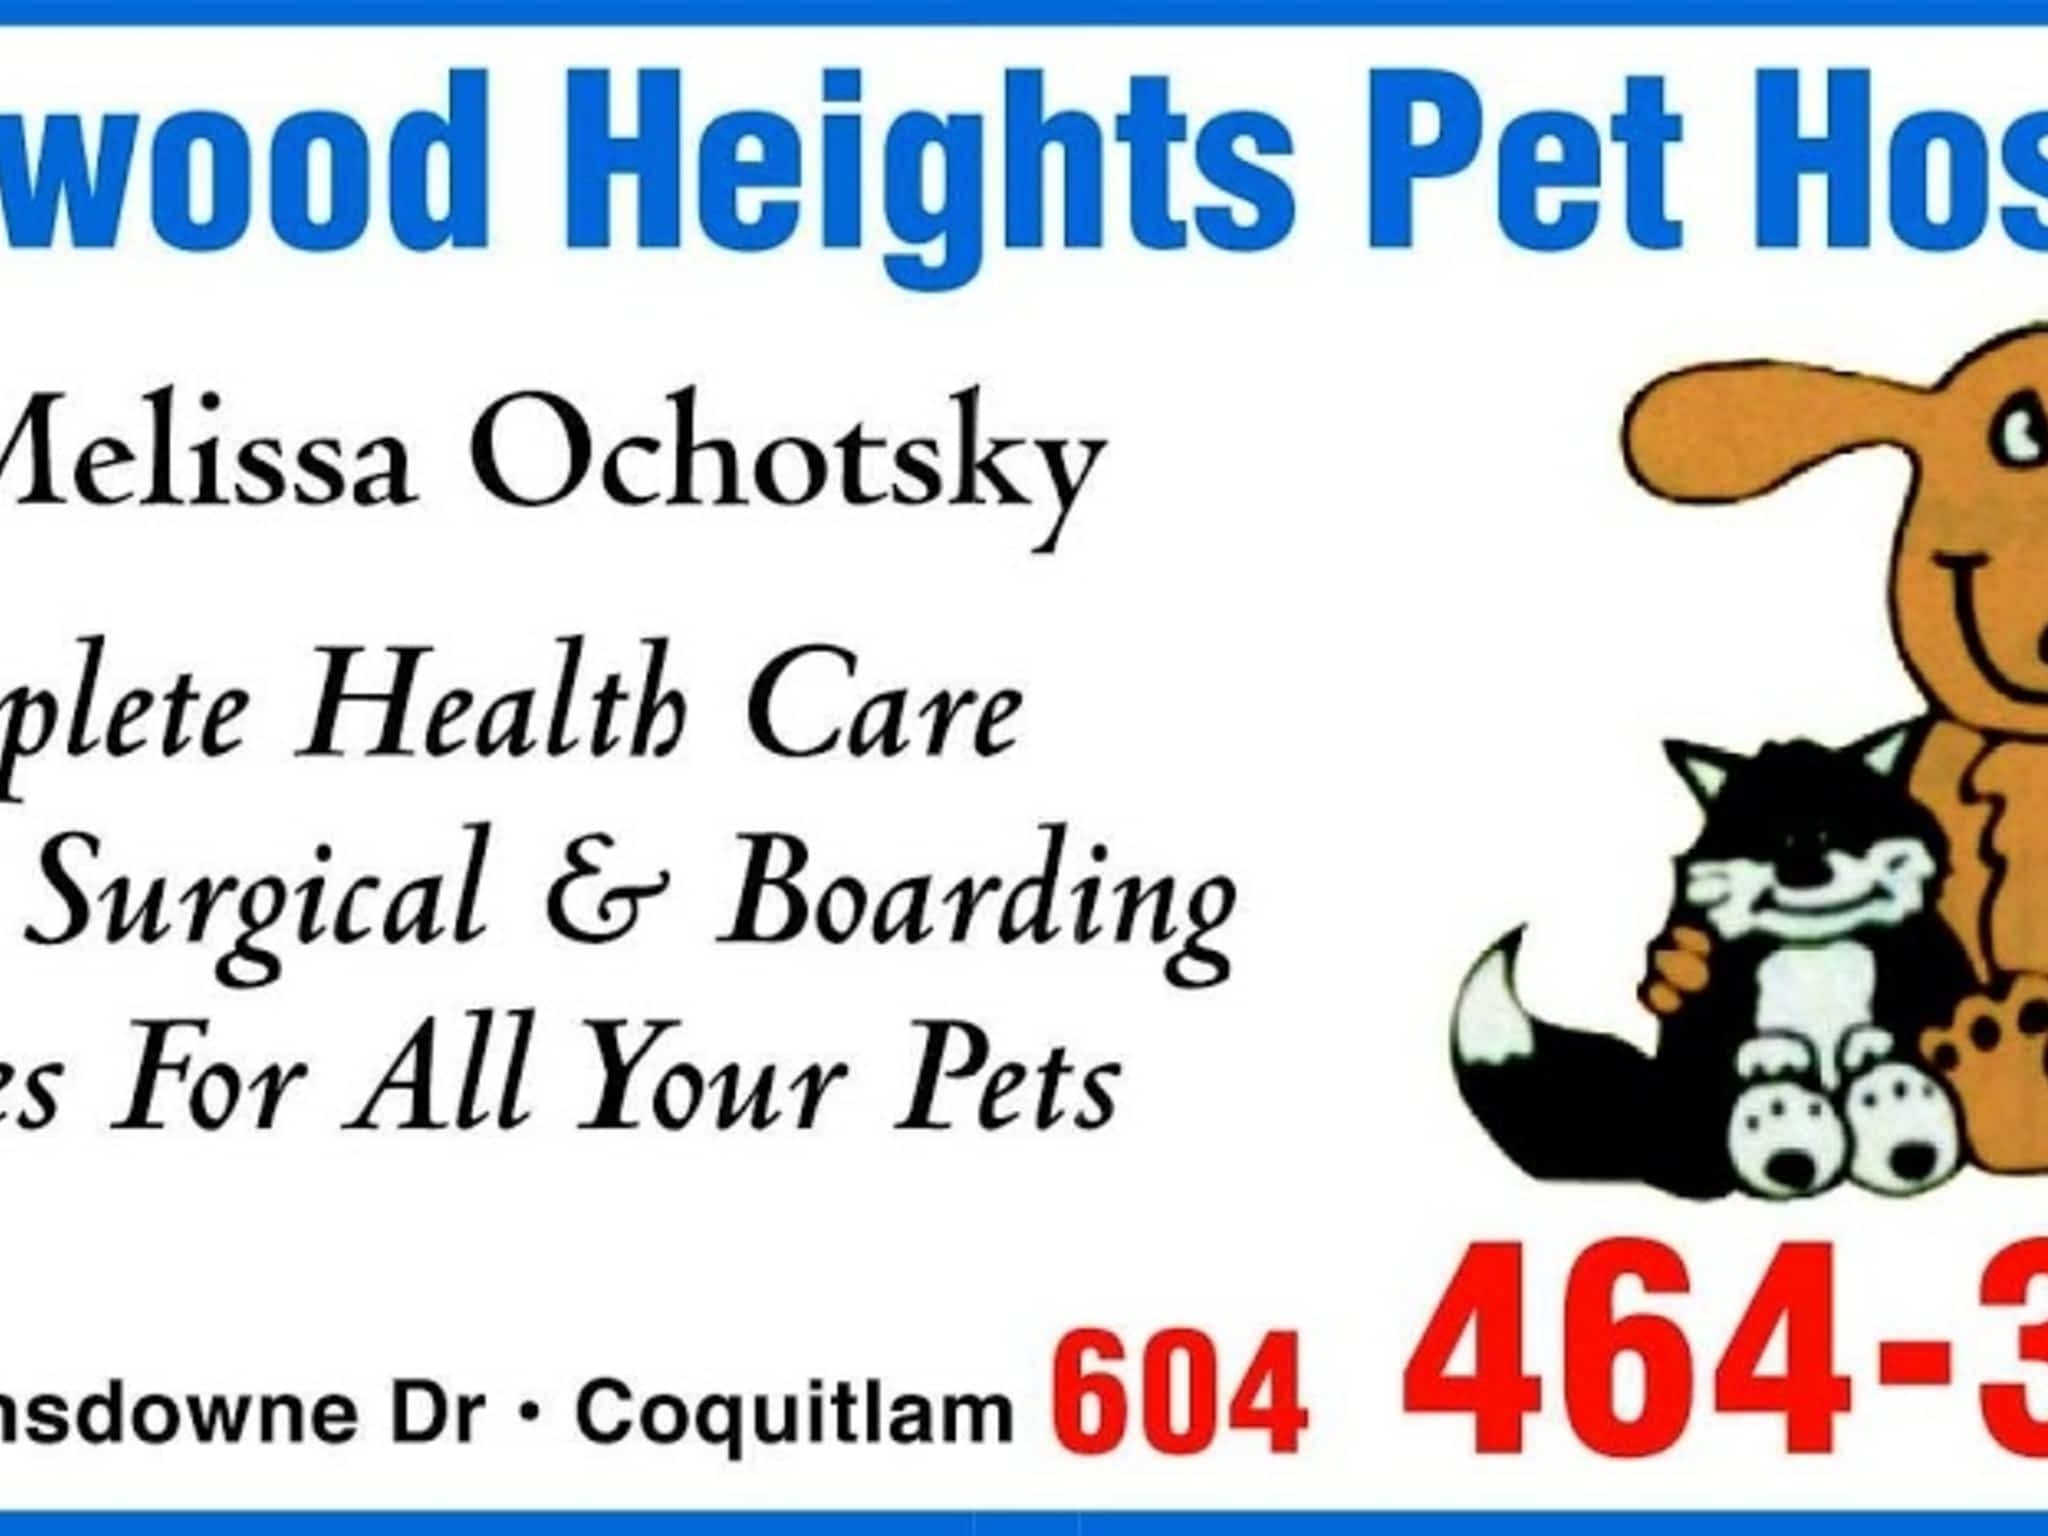 photo Westwood Heights Pet Hospital